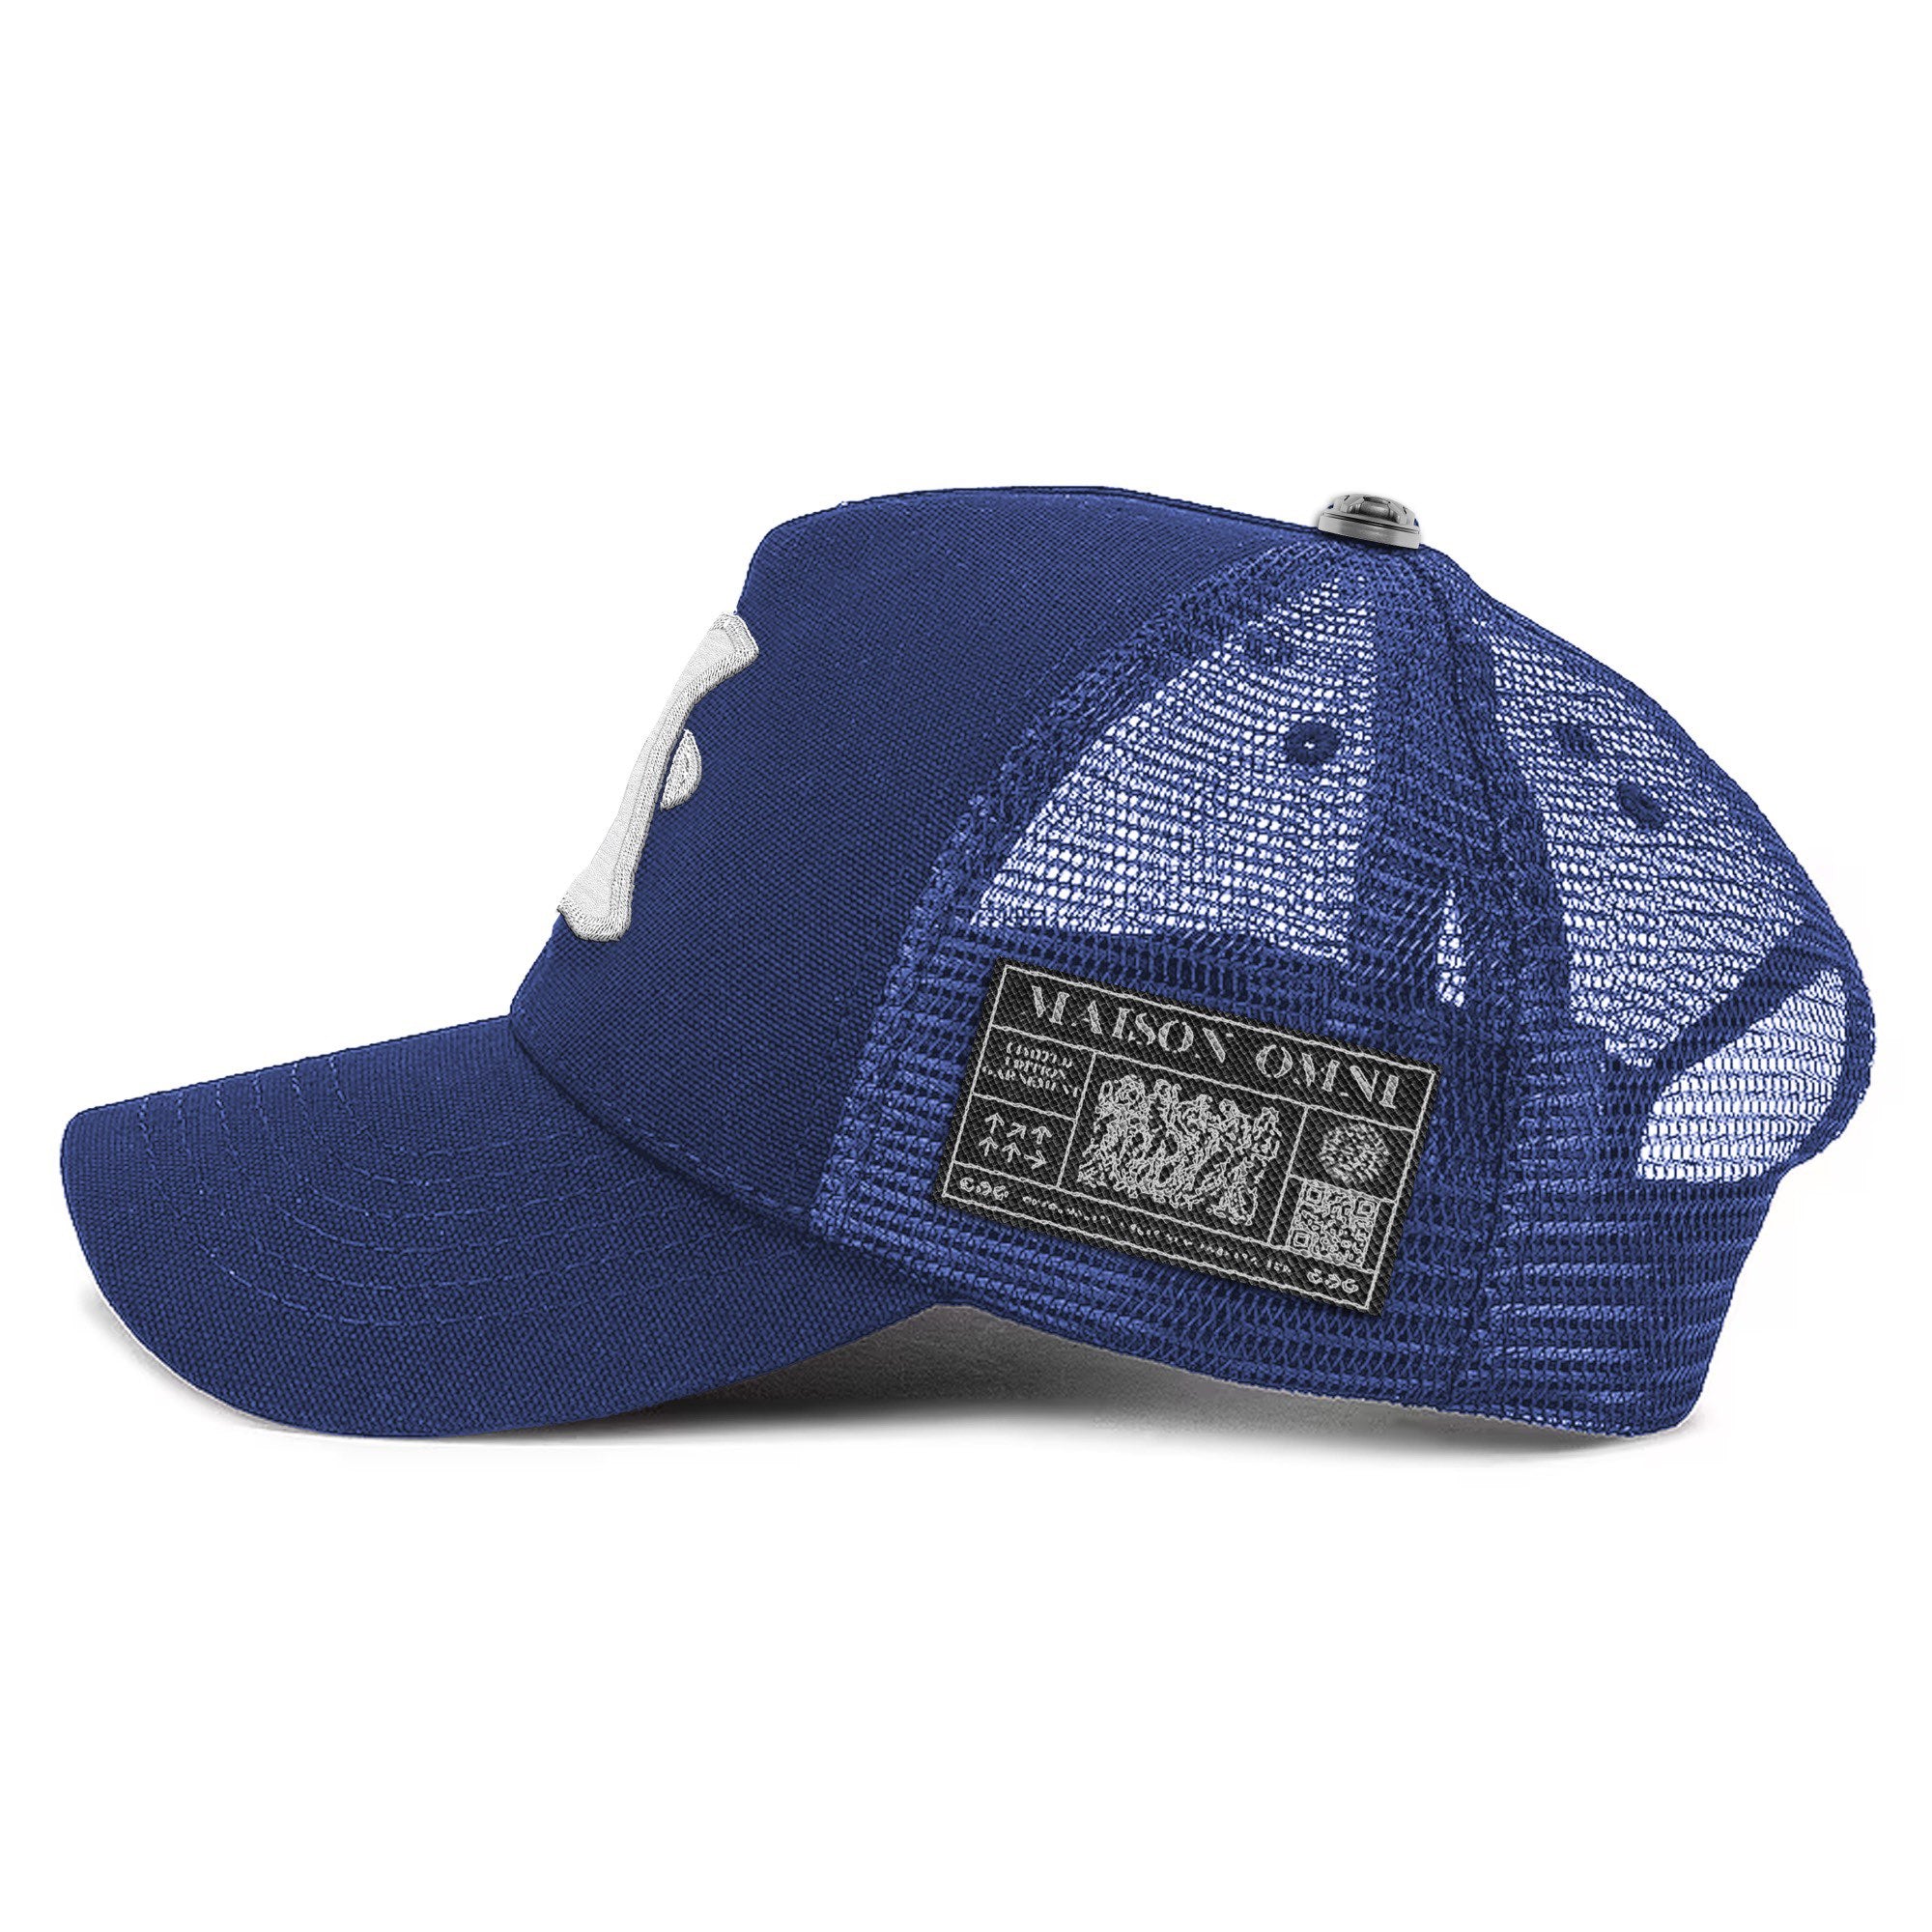 OmniMedici Mesh Trucker Hat navy blue